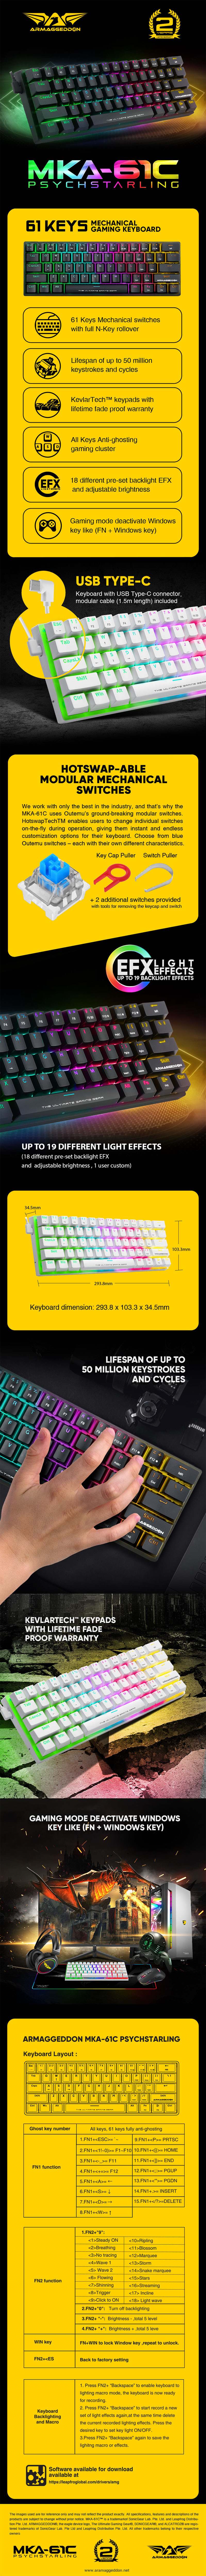 Keyboards-Armaggeddon-MKA-61C-Psychfalconet-61-Key-Mechanical-Gaming-Keyboard-White-2